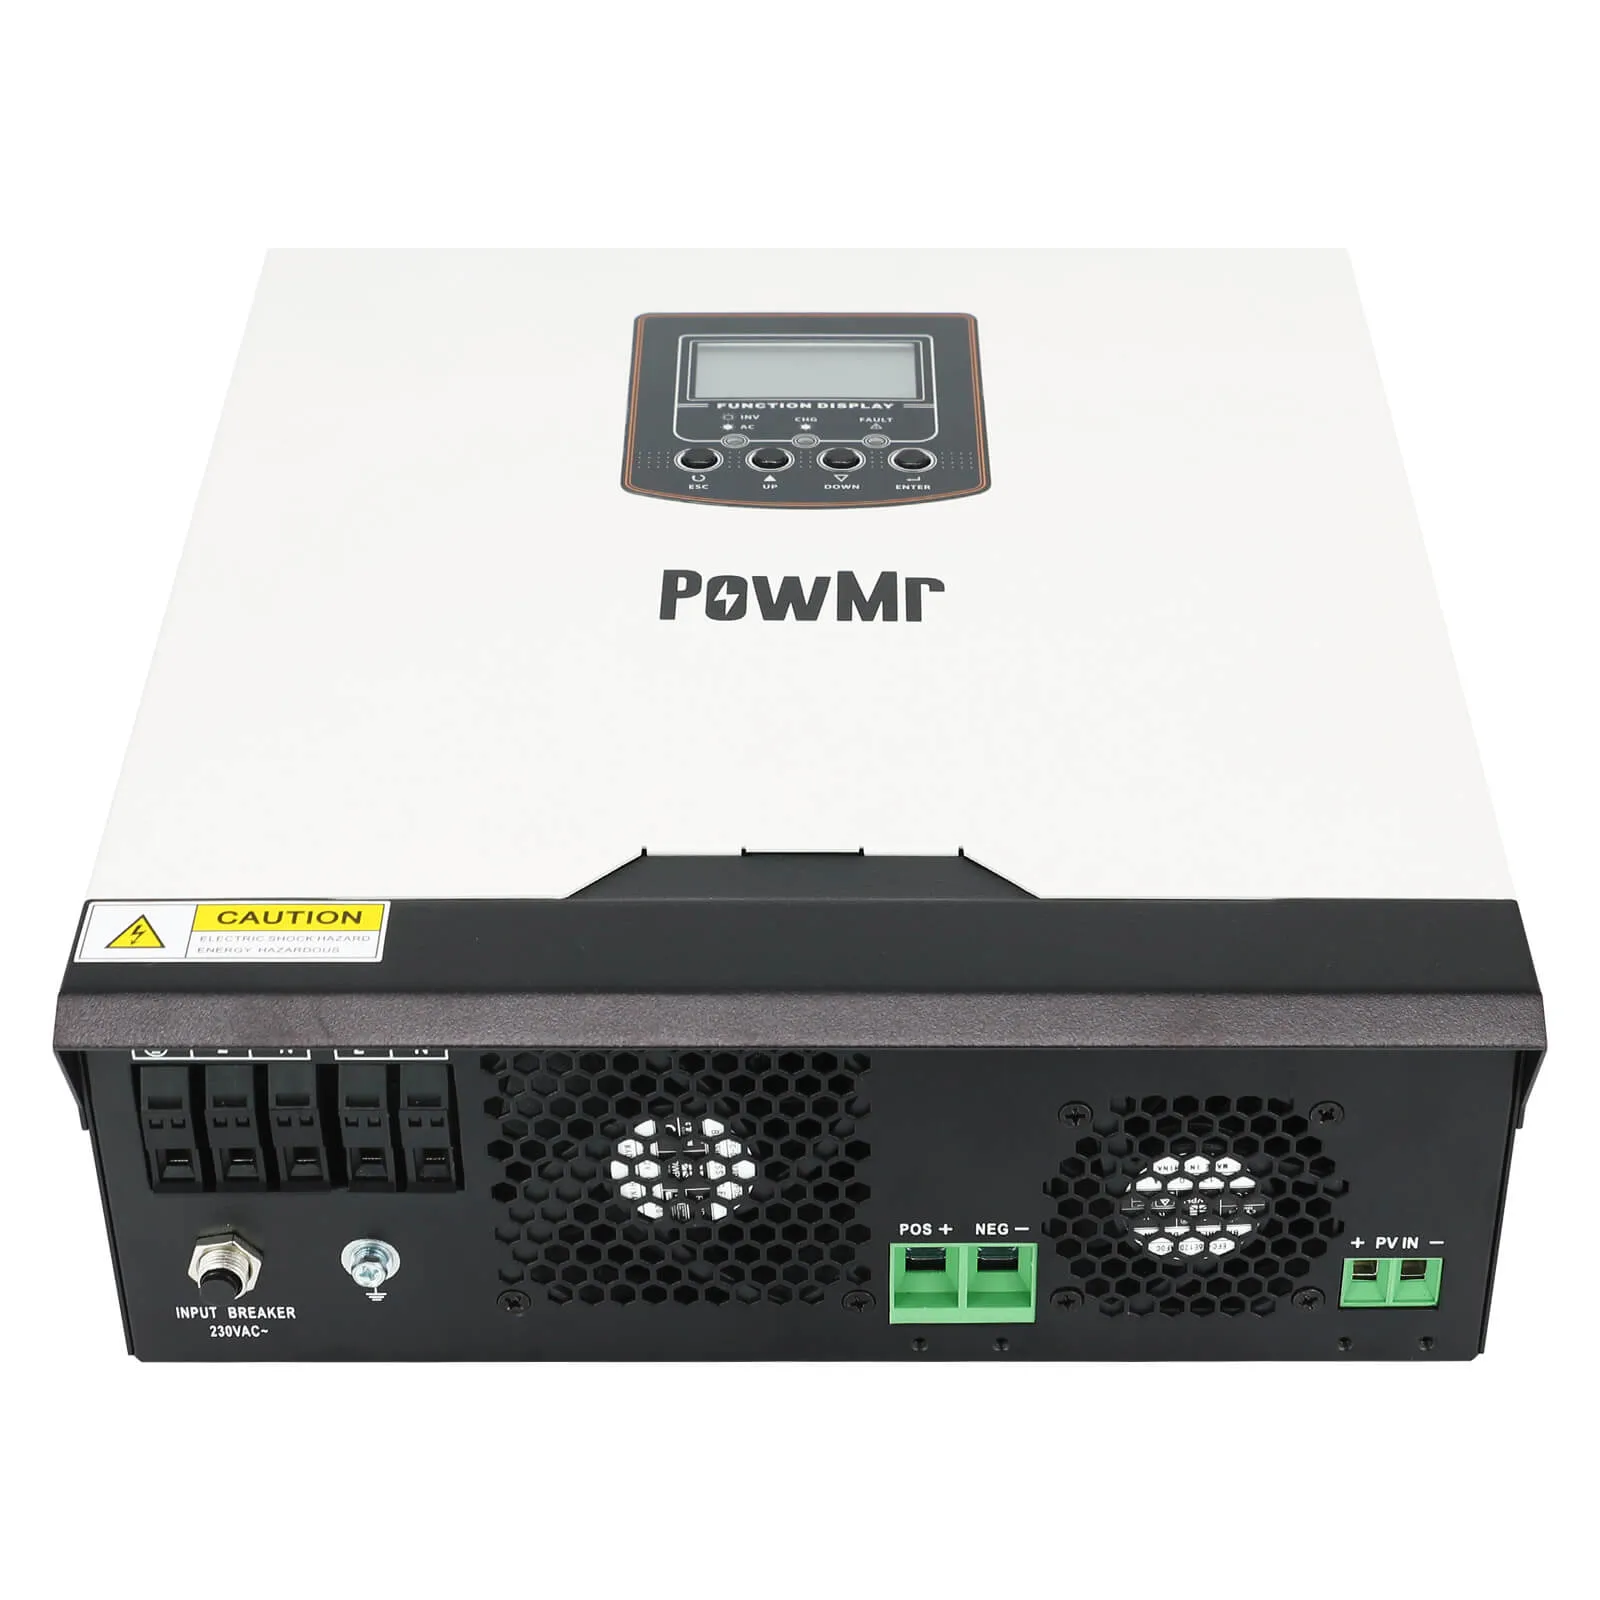 PowMr 3000W Hybrid Inverter 24V DC to 230V AC Bulit in Charge Controller